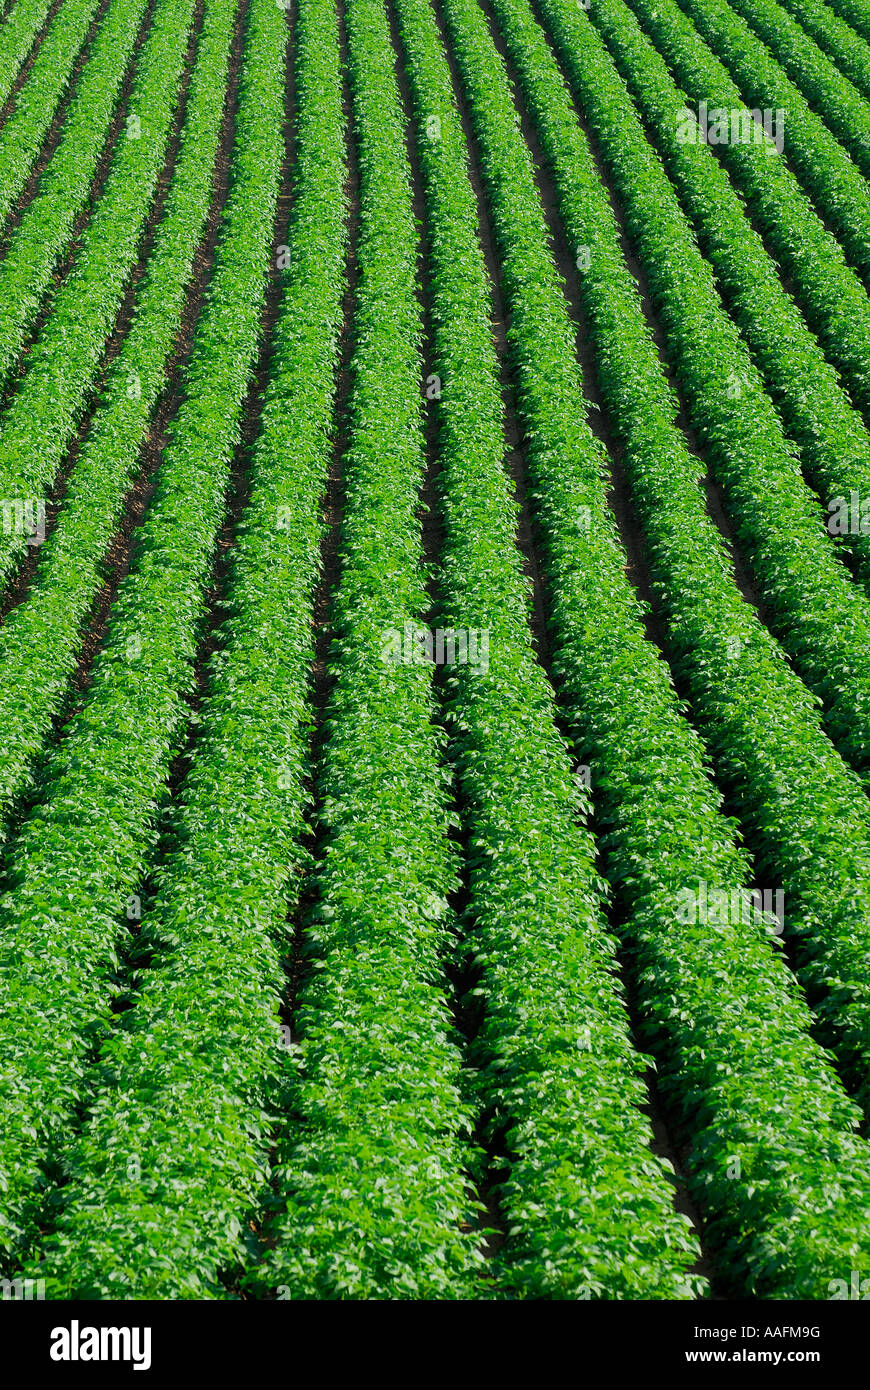 potato crop in norfolk, england Stock Photo